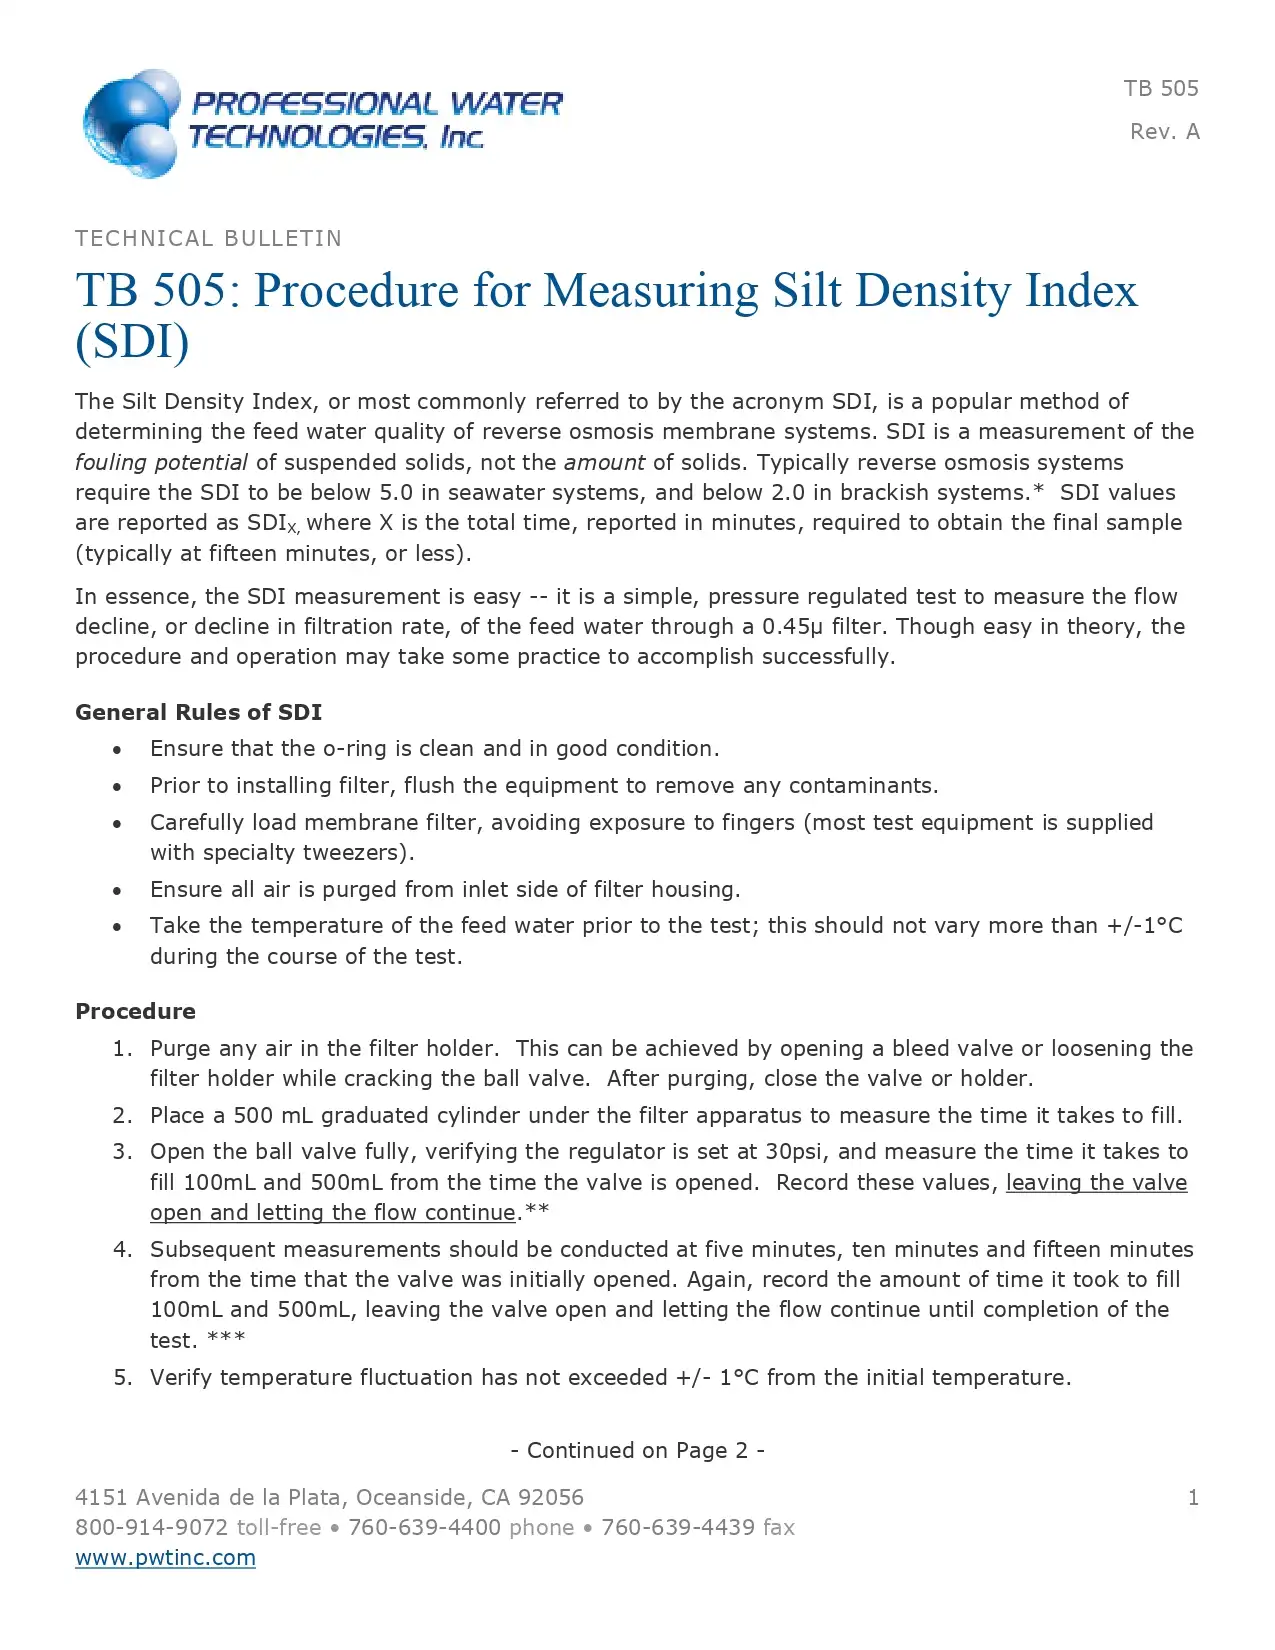 Procedure for Measuring Silt Density Index (SDI)